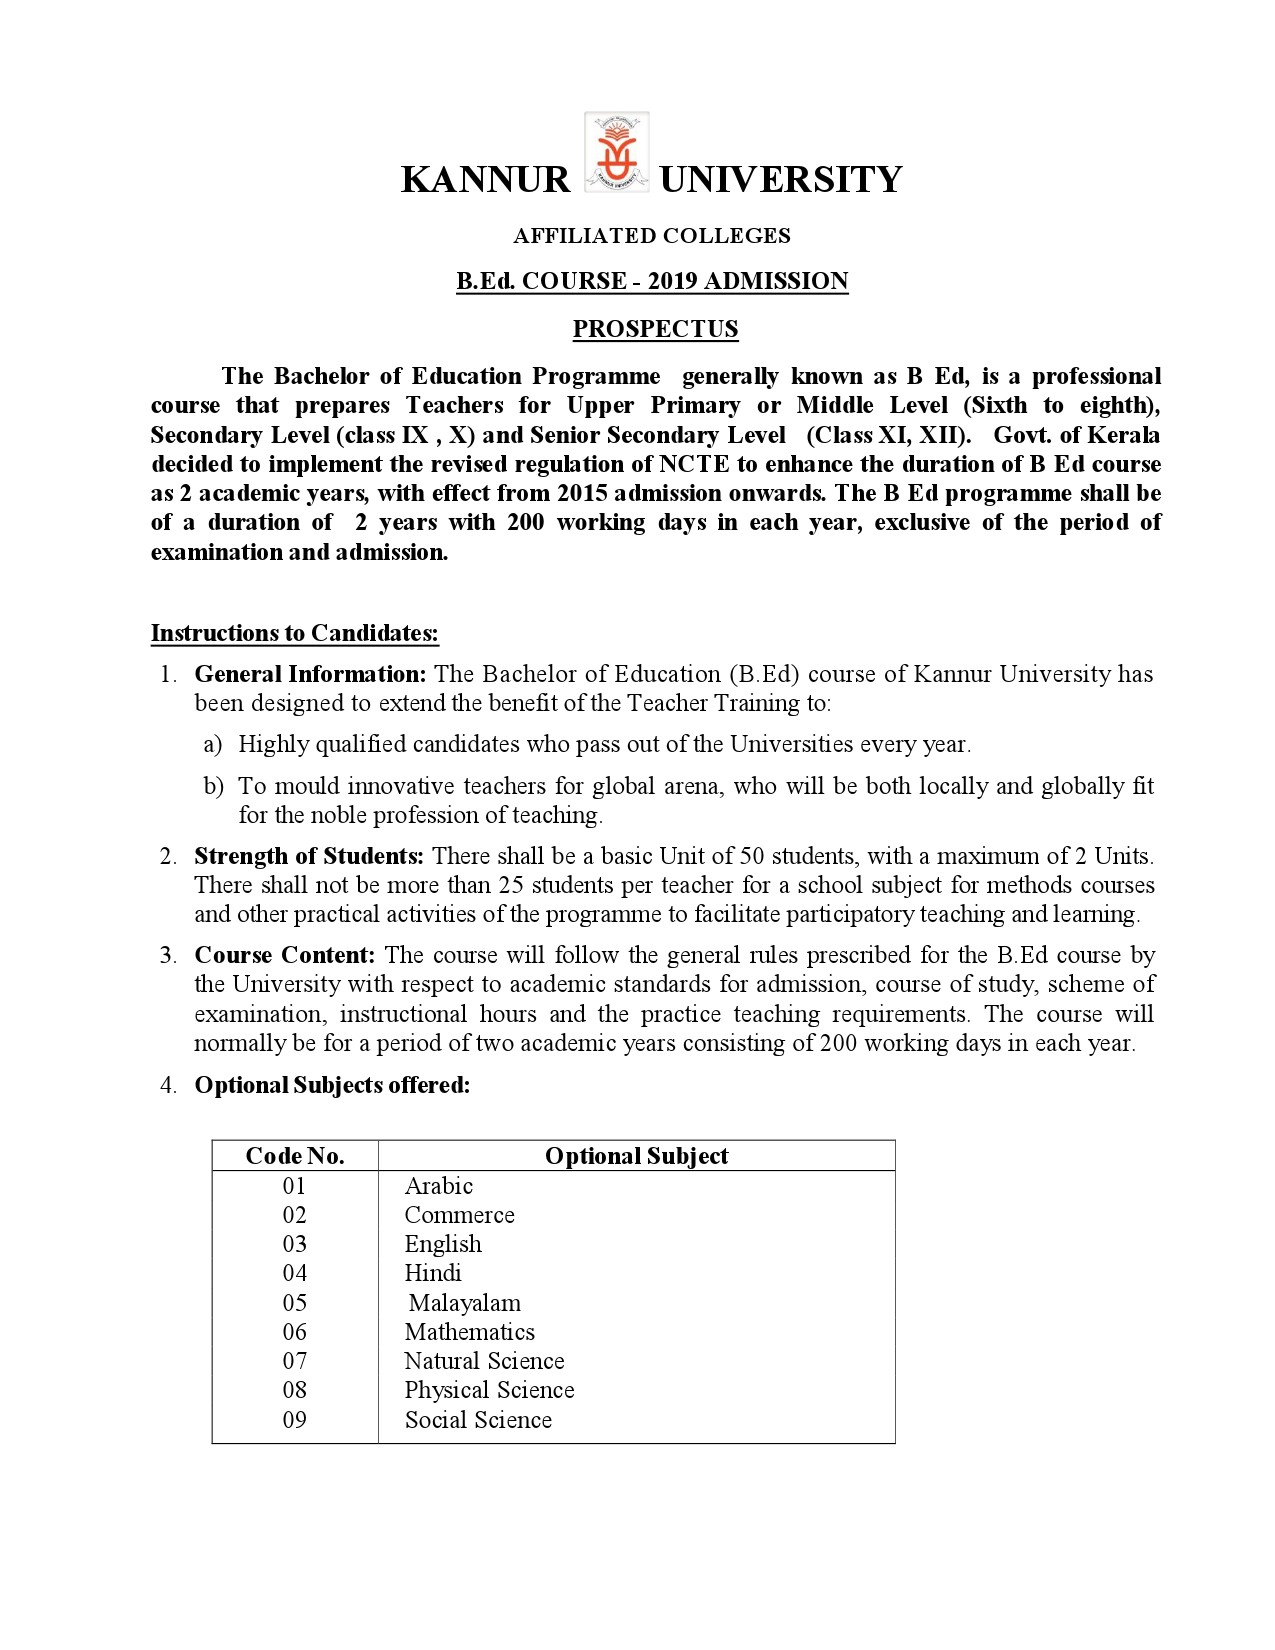 Kannur University B Ed Admission Prospectus 2019 - Notification Image 4